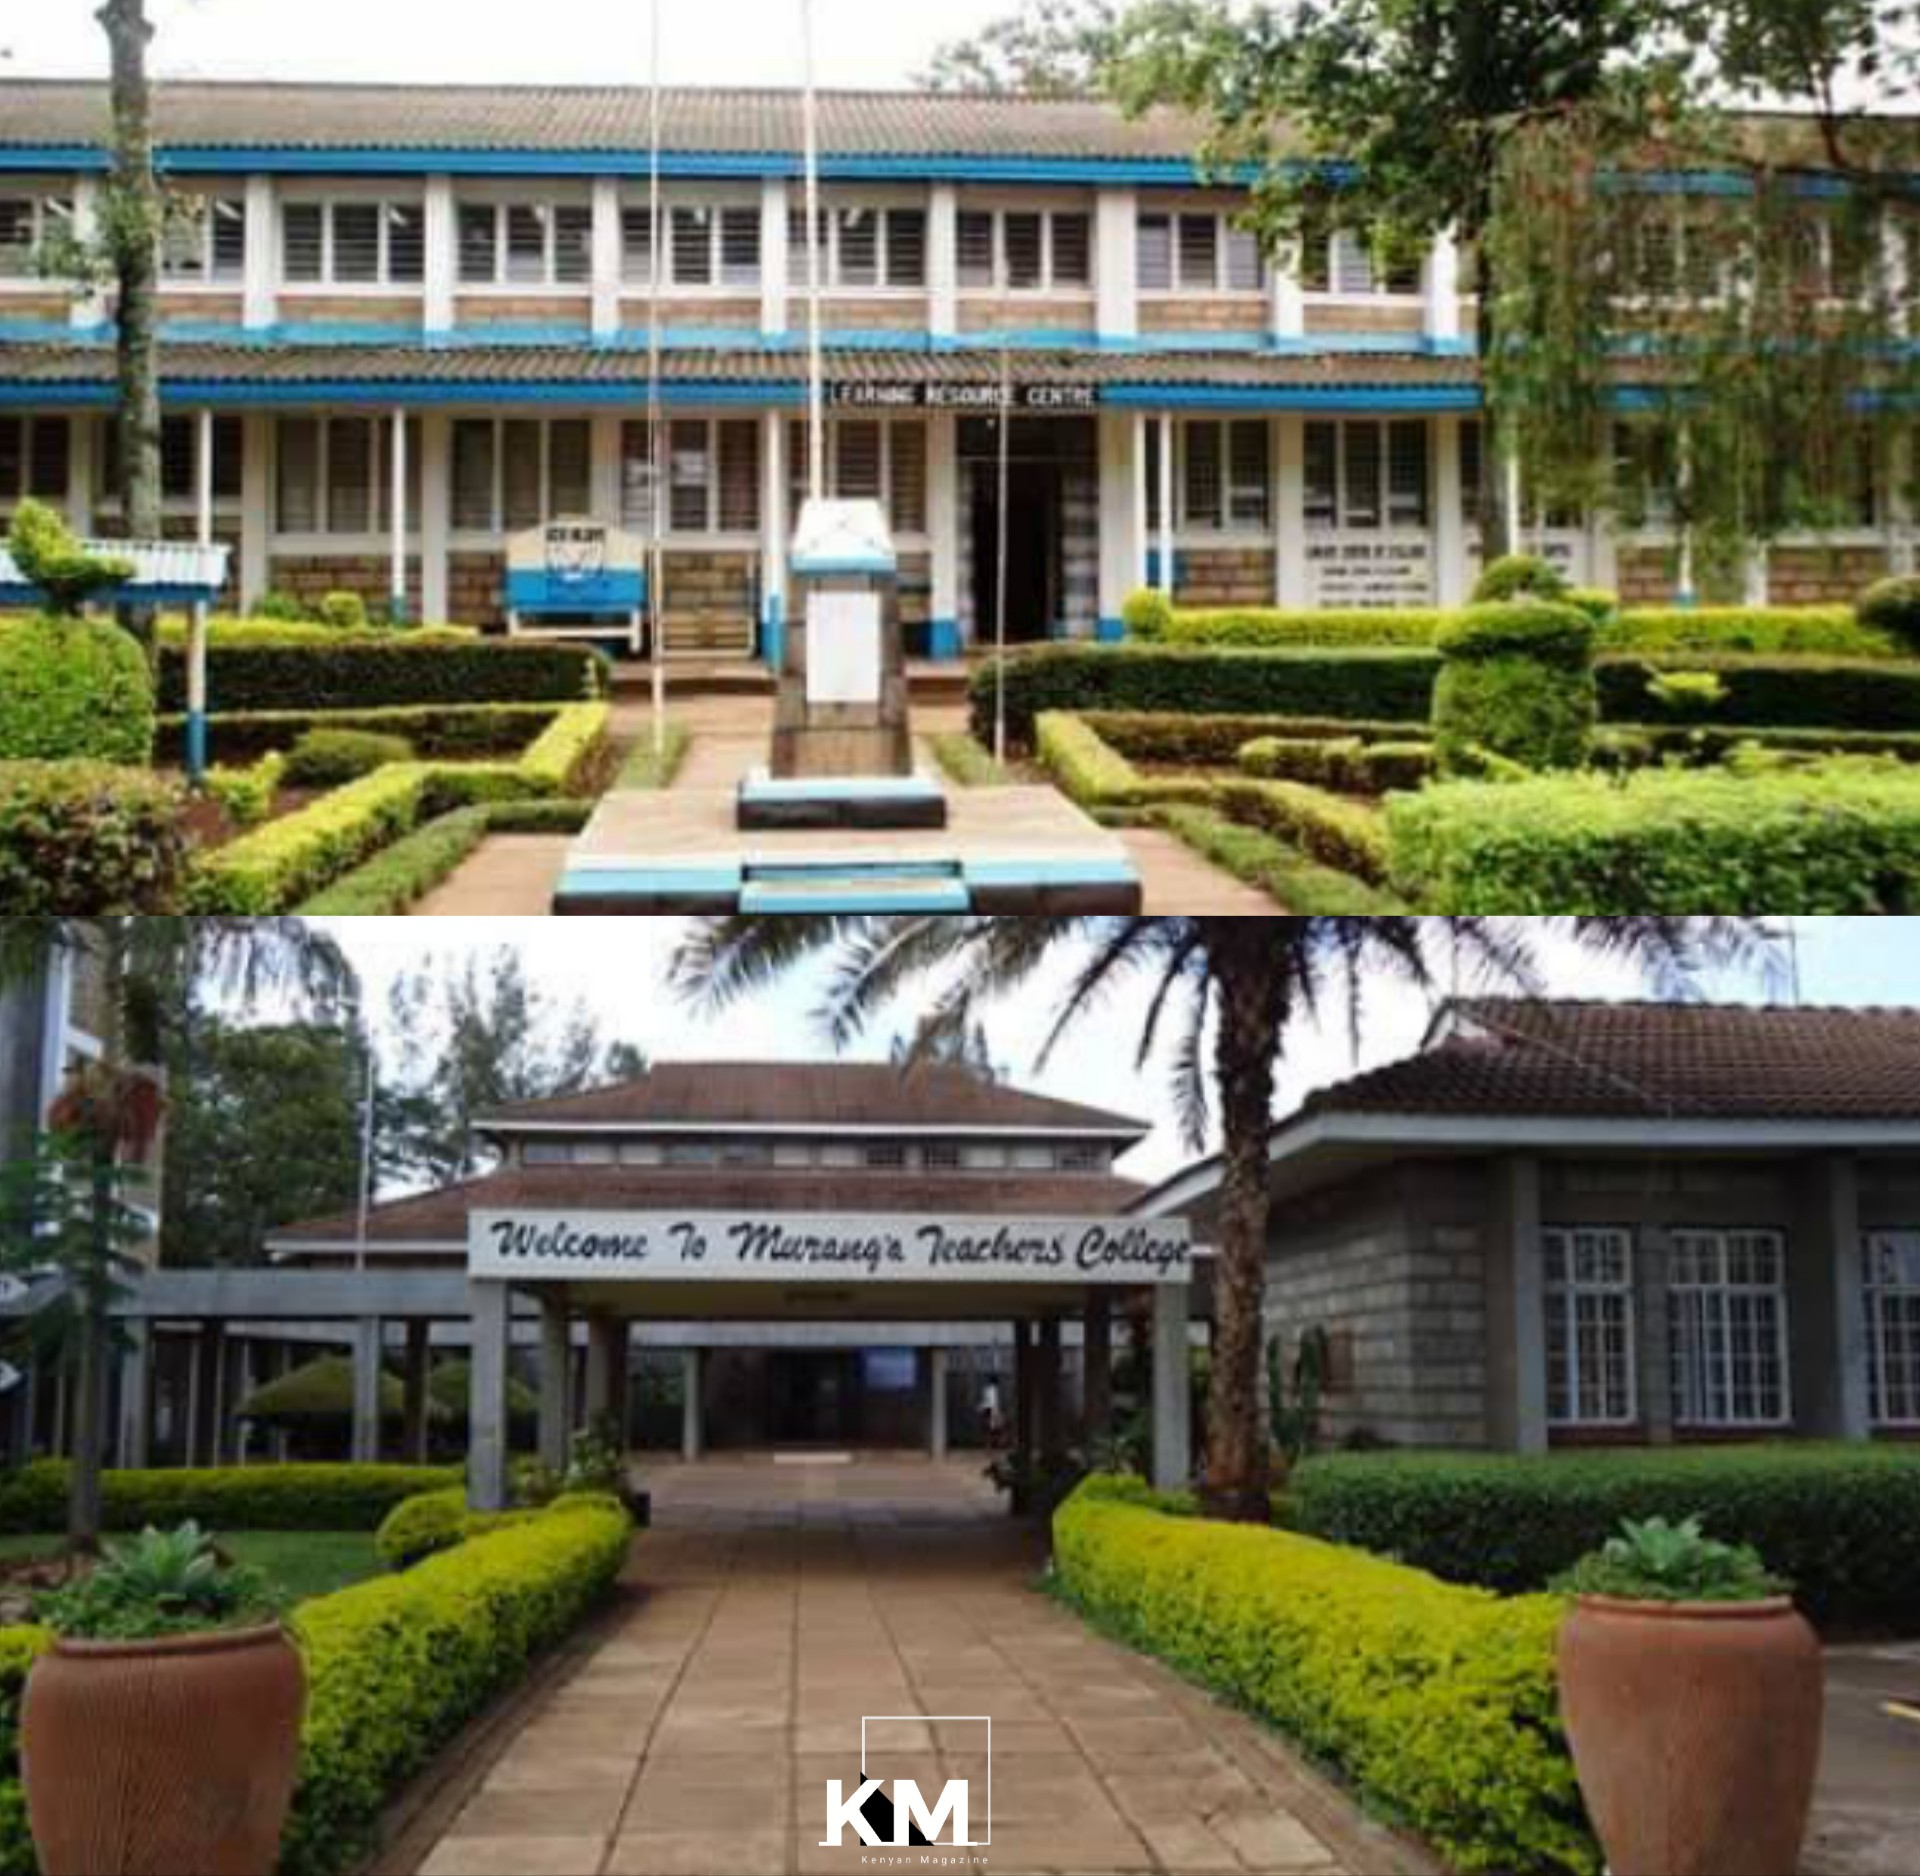 Teachers Training Colleges in Kenya